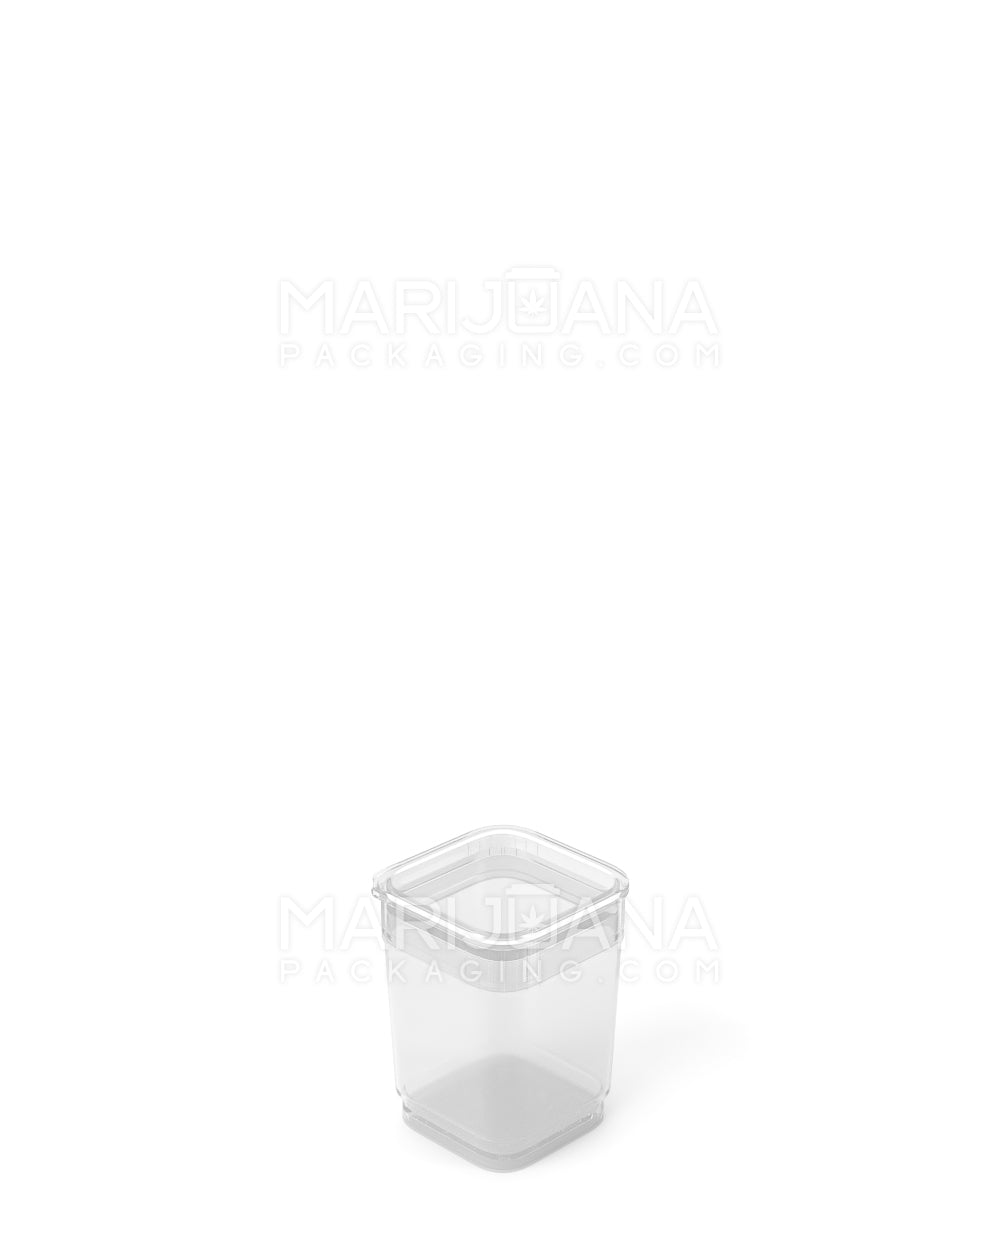 POLLEN GEAR | Child Resistant 100% Recyclable Transparent Clear Pop Box Pop Top Bottles | 6dr - 1g - 1632 Count